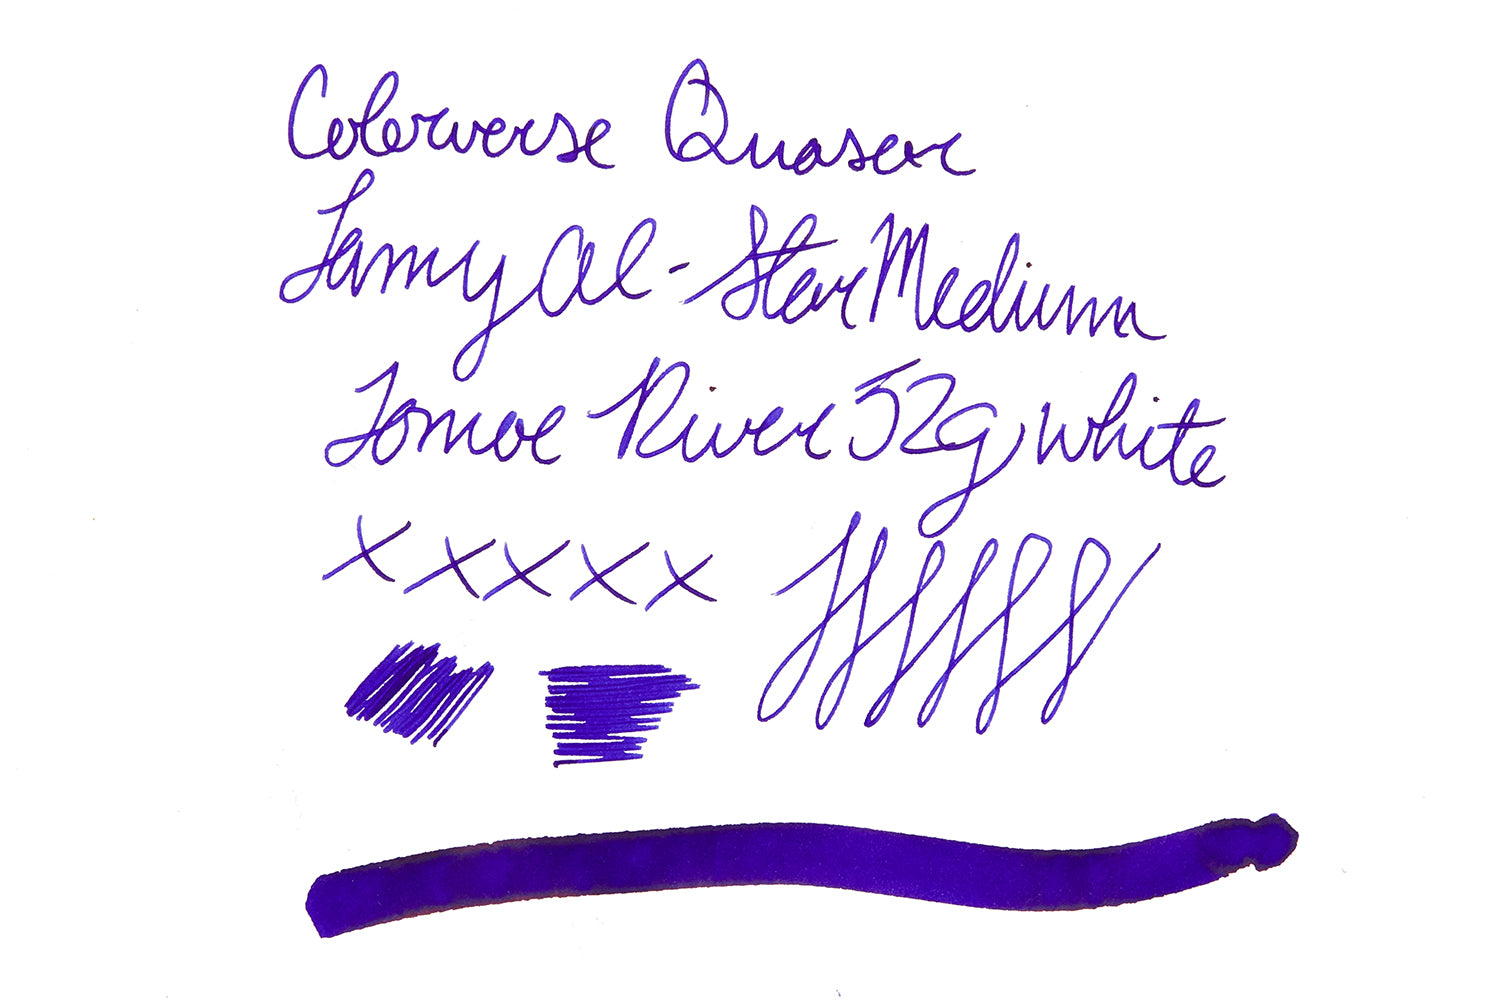 Colorverse Quasar Writing Sample on Tomoe River Paper